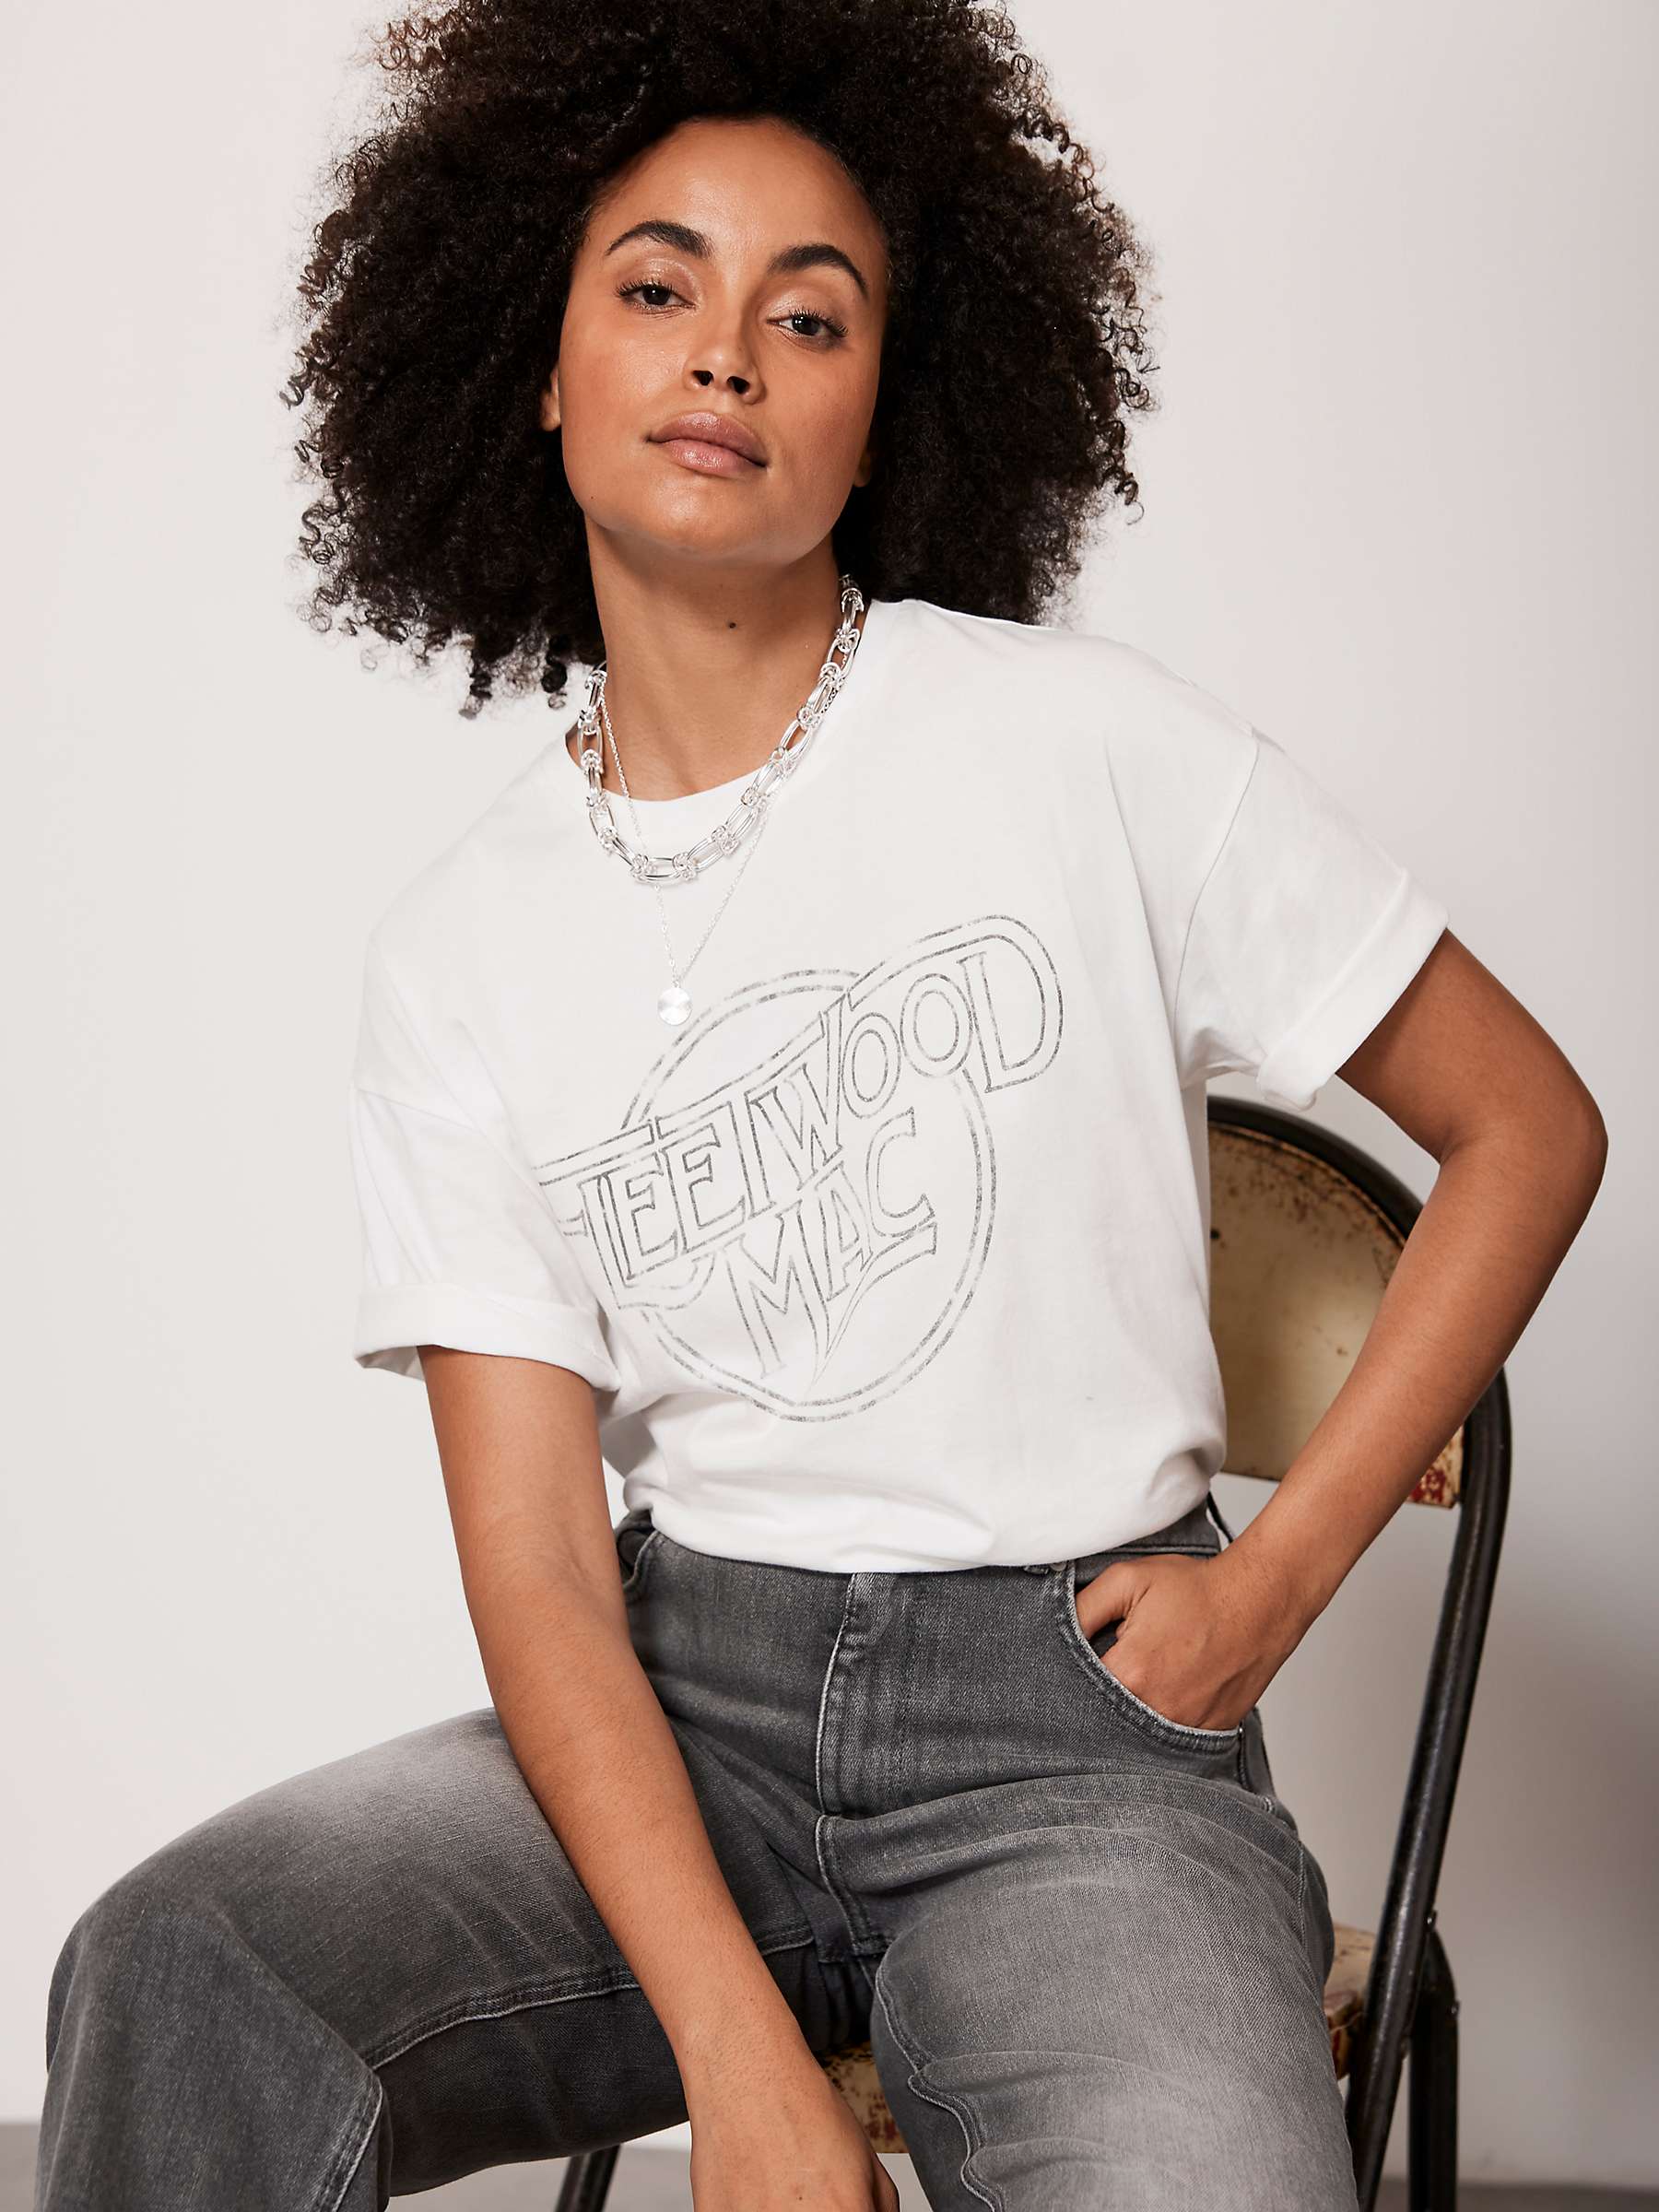 Buy Mint Velvet Cotton Fleetwood Mac T-Shirt, White Online at johnlewis.com